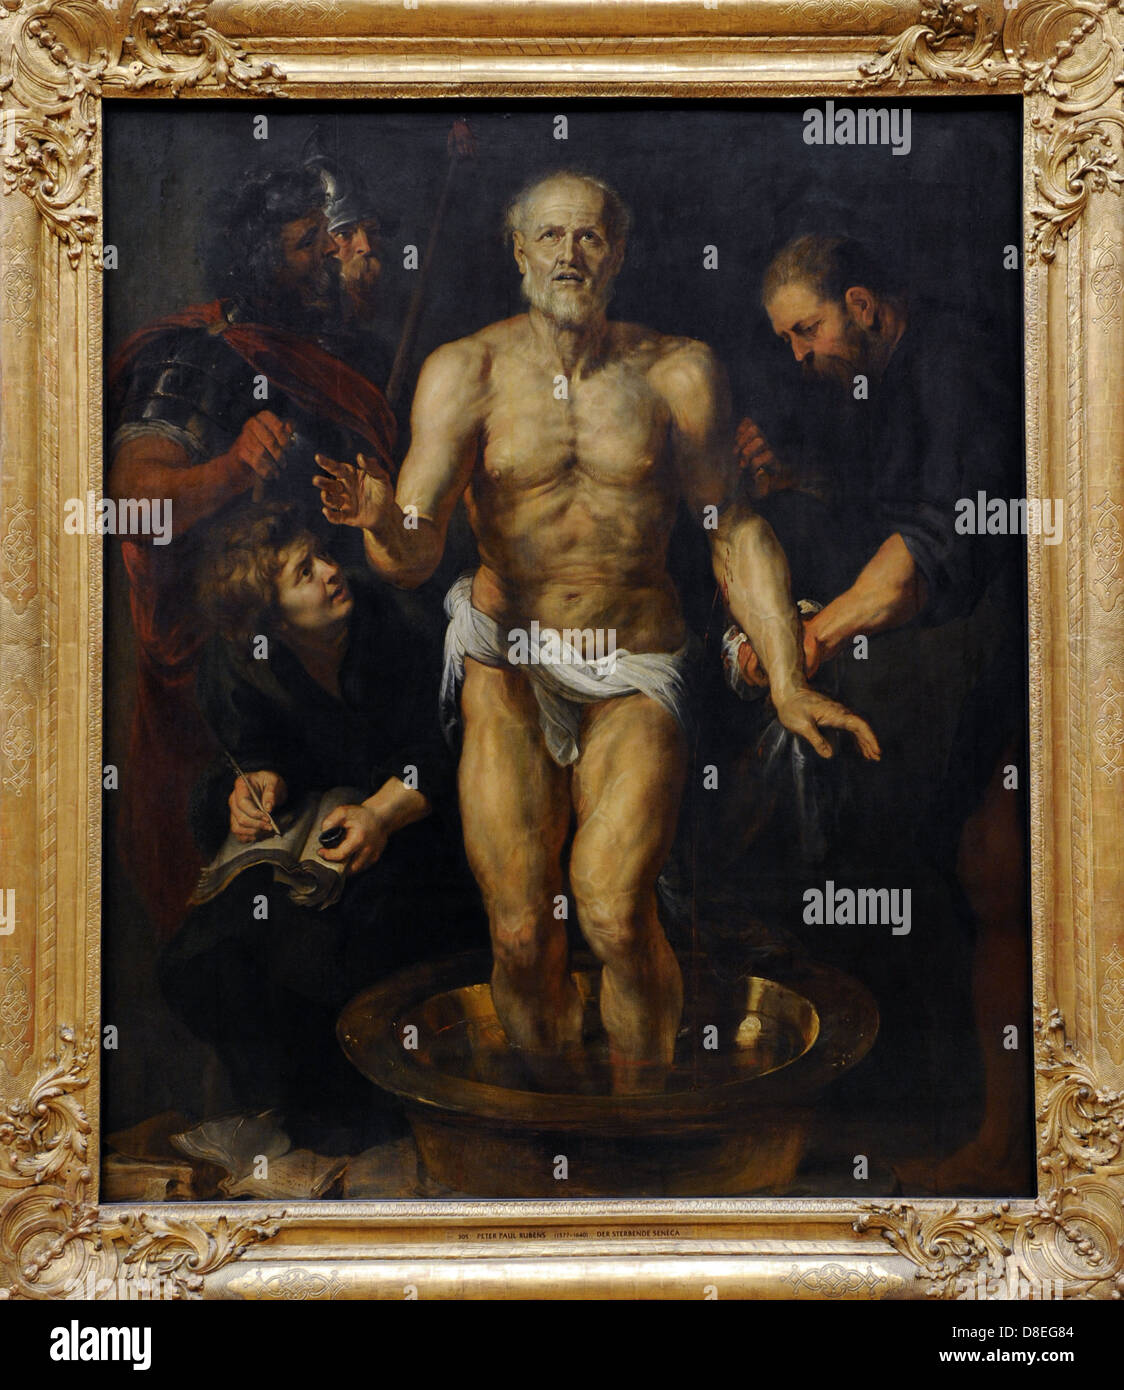 Peter Paul Rubens (1577-1640). Nacida en Alemania, pintor barroco flamenco. La muerte de Séneca, 1614. Alte Pinakothek. Munich. Alemania. Foto de stock